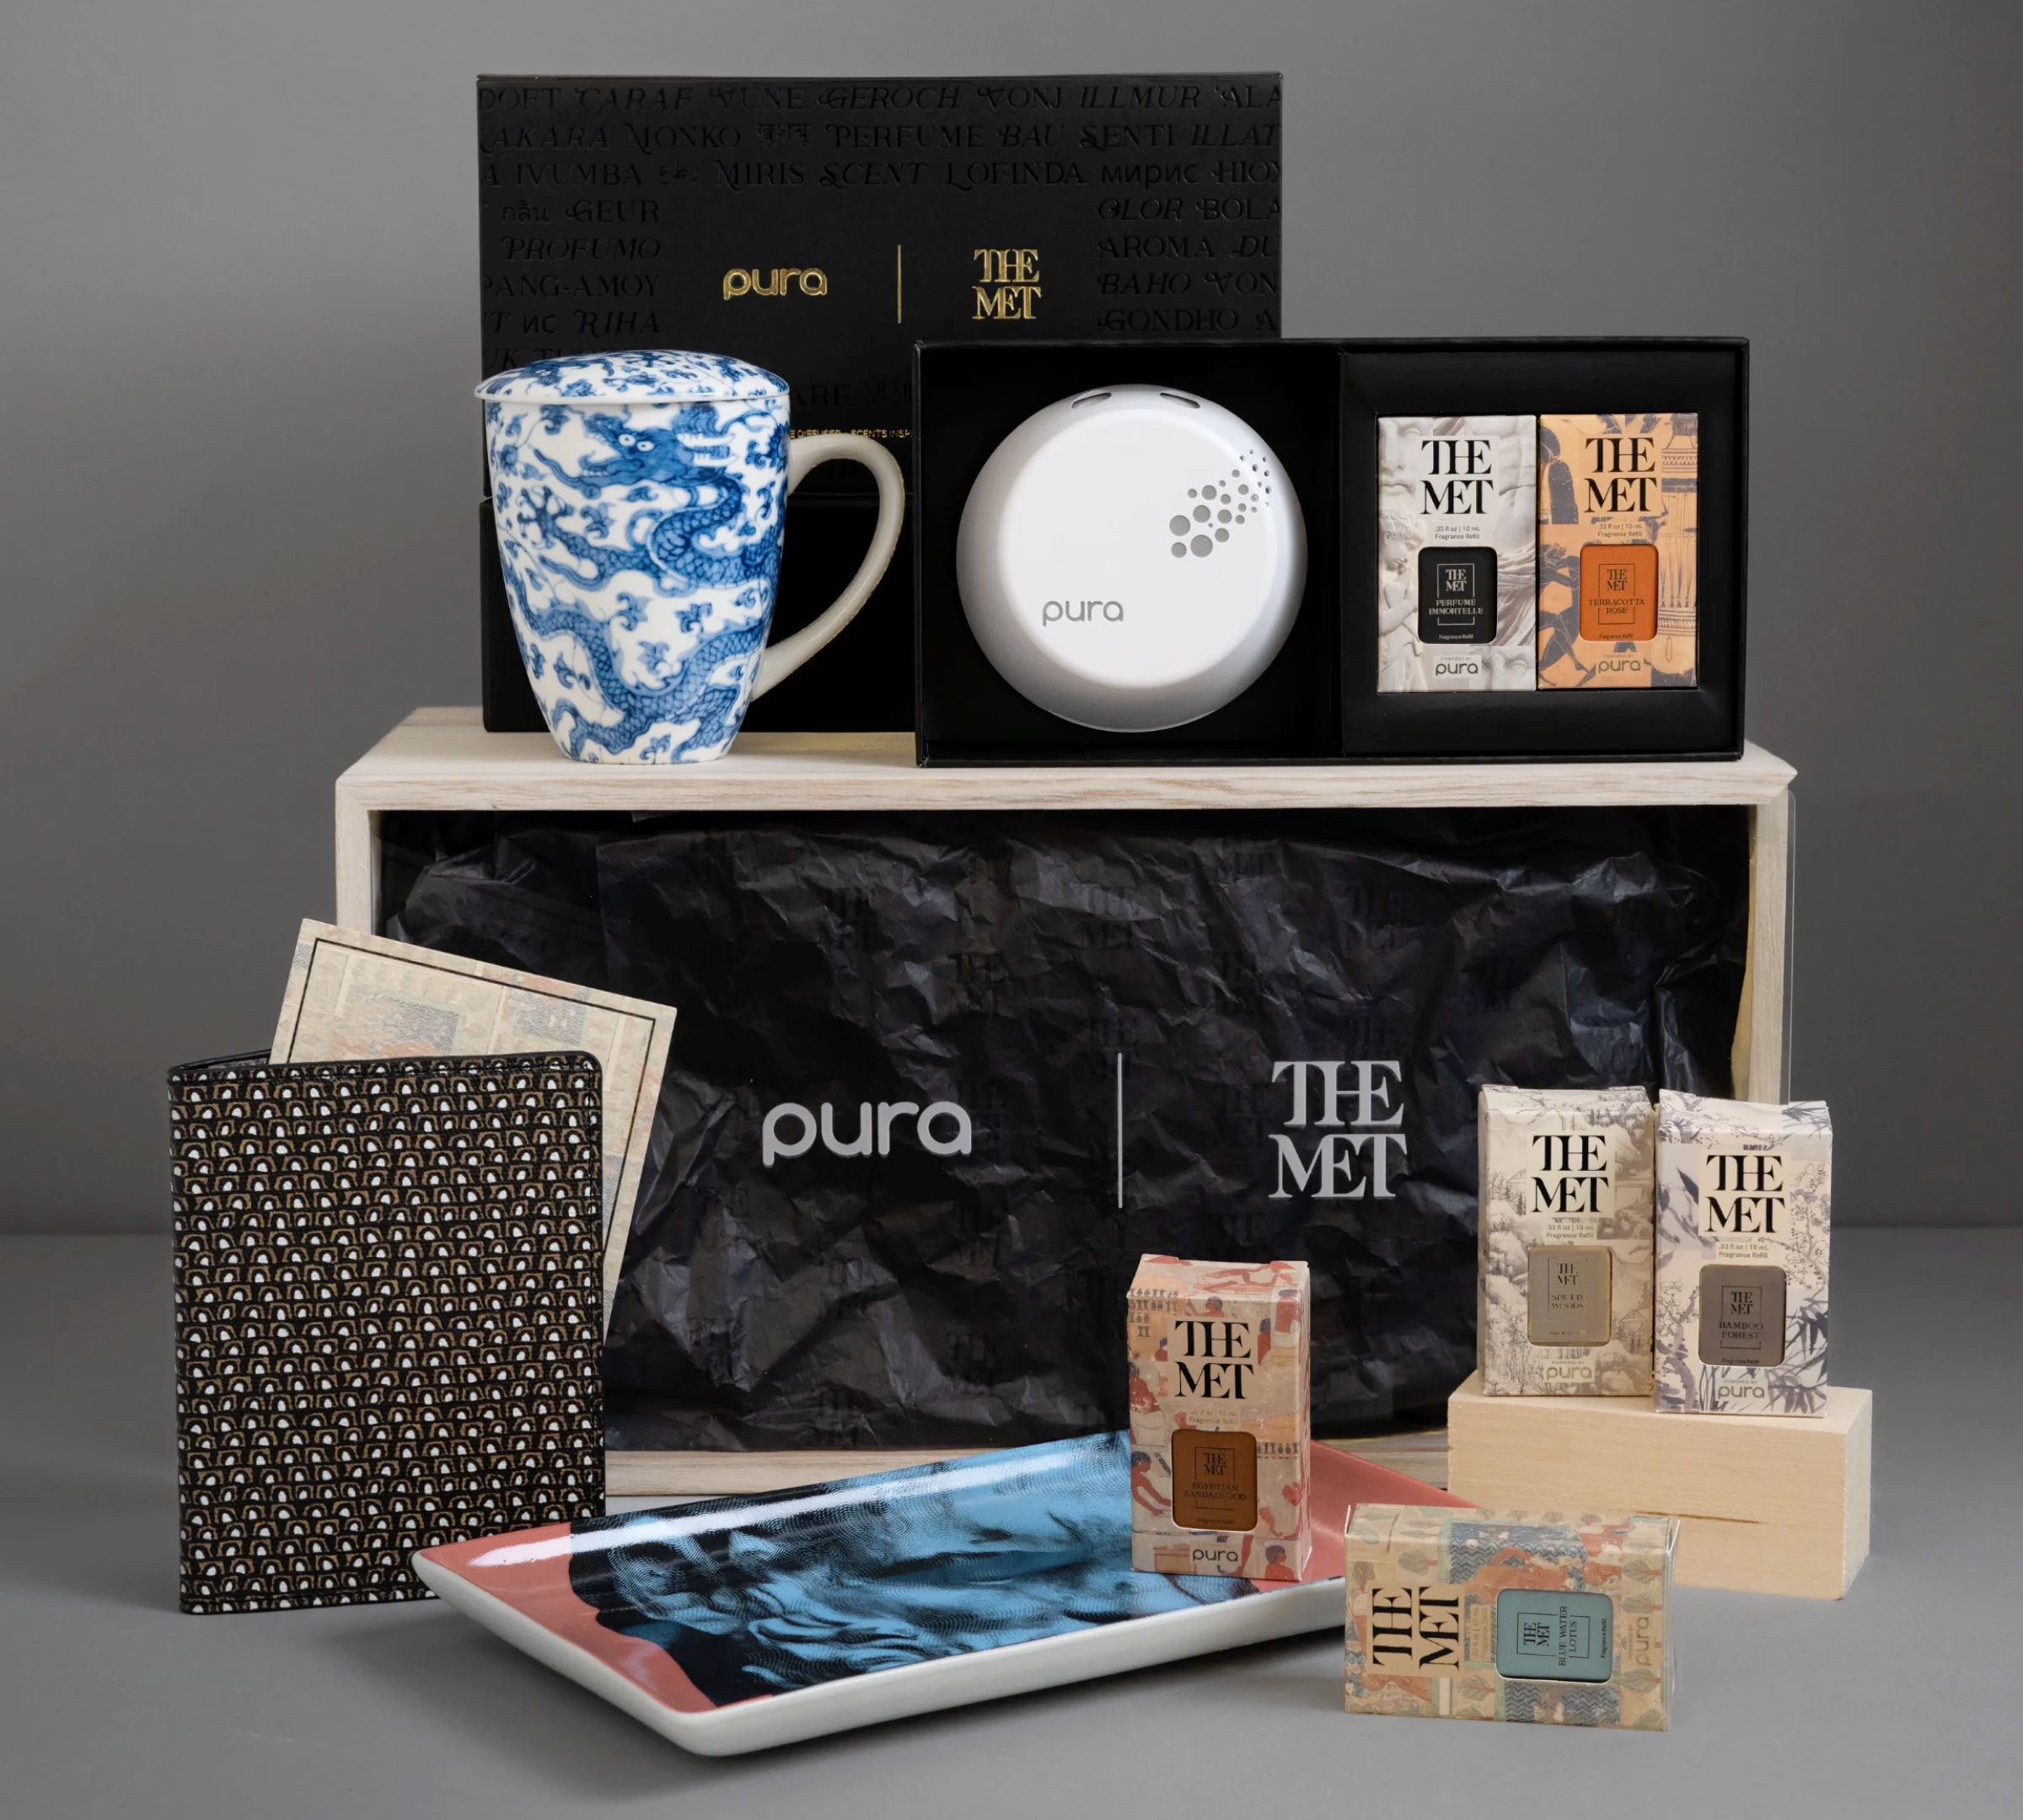 La Pura x The Met Fragrance Collection